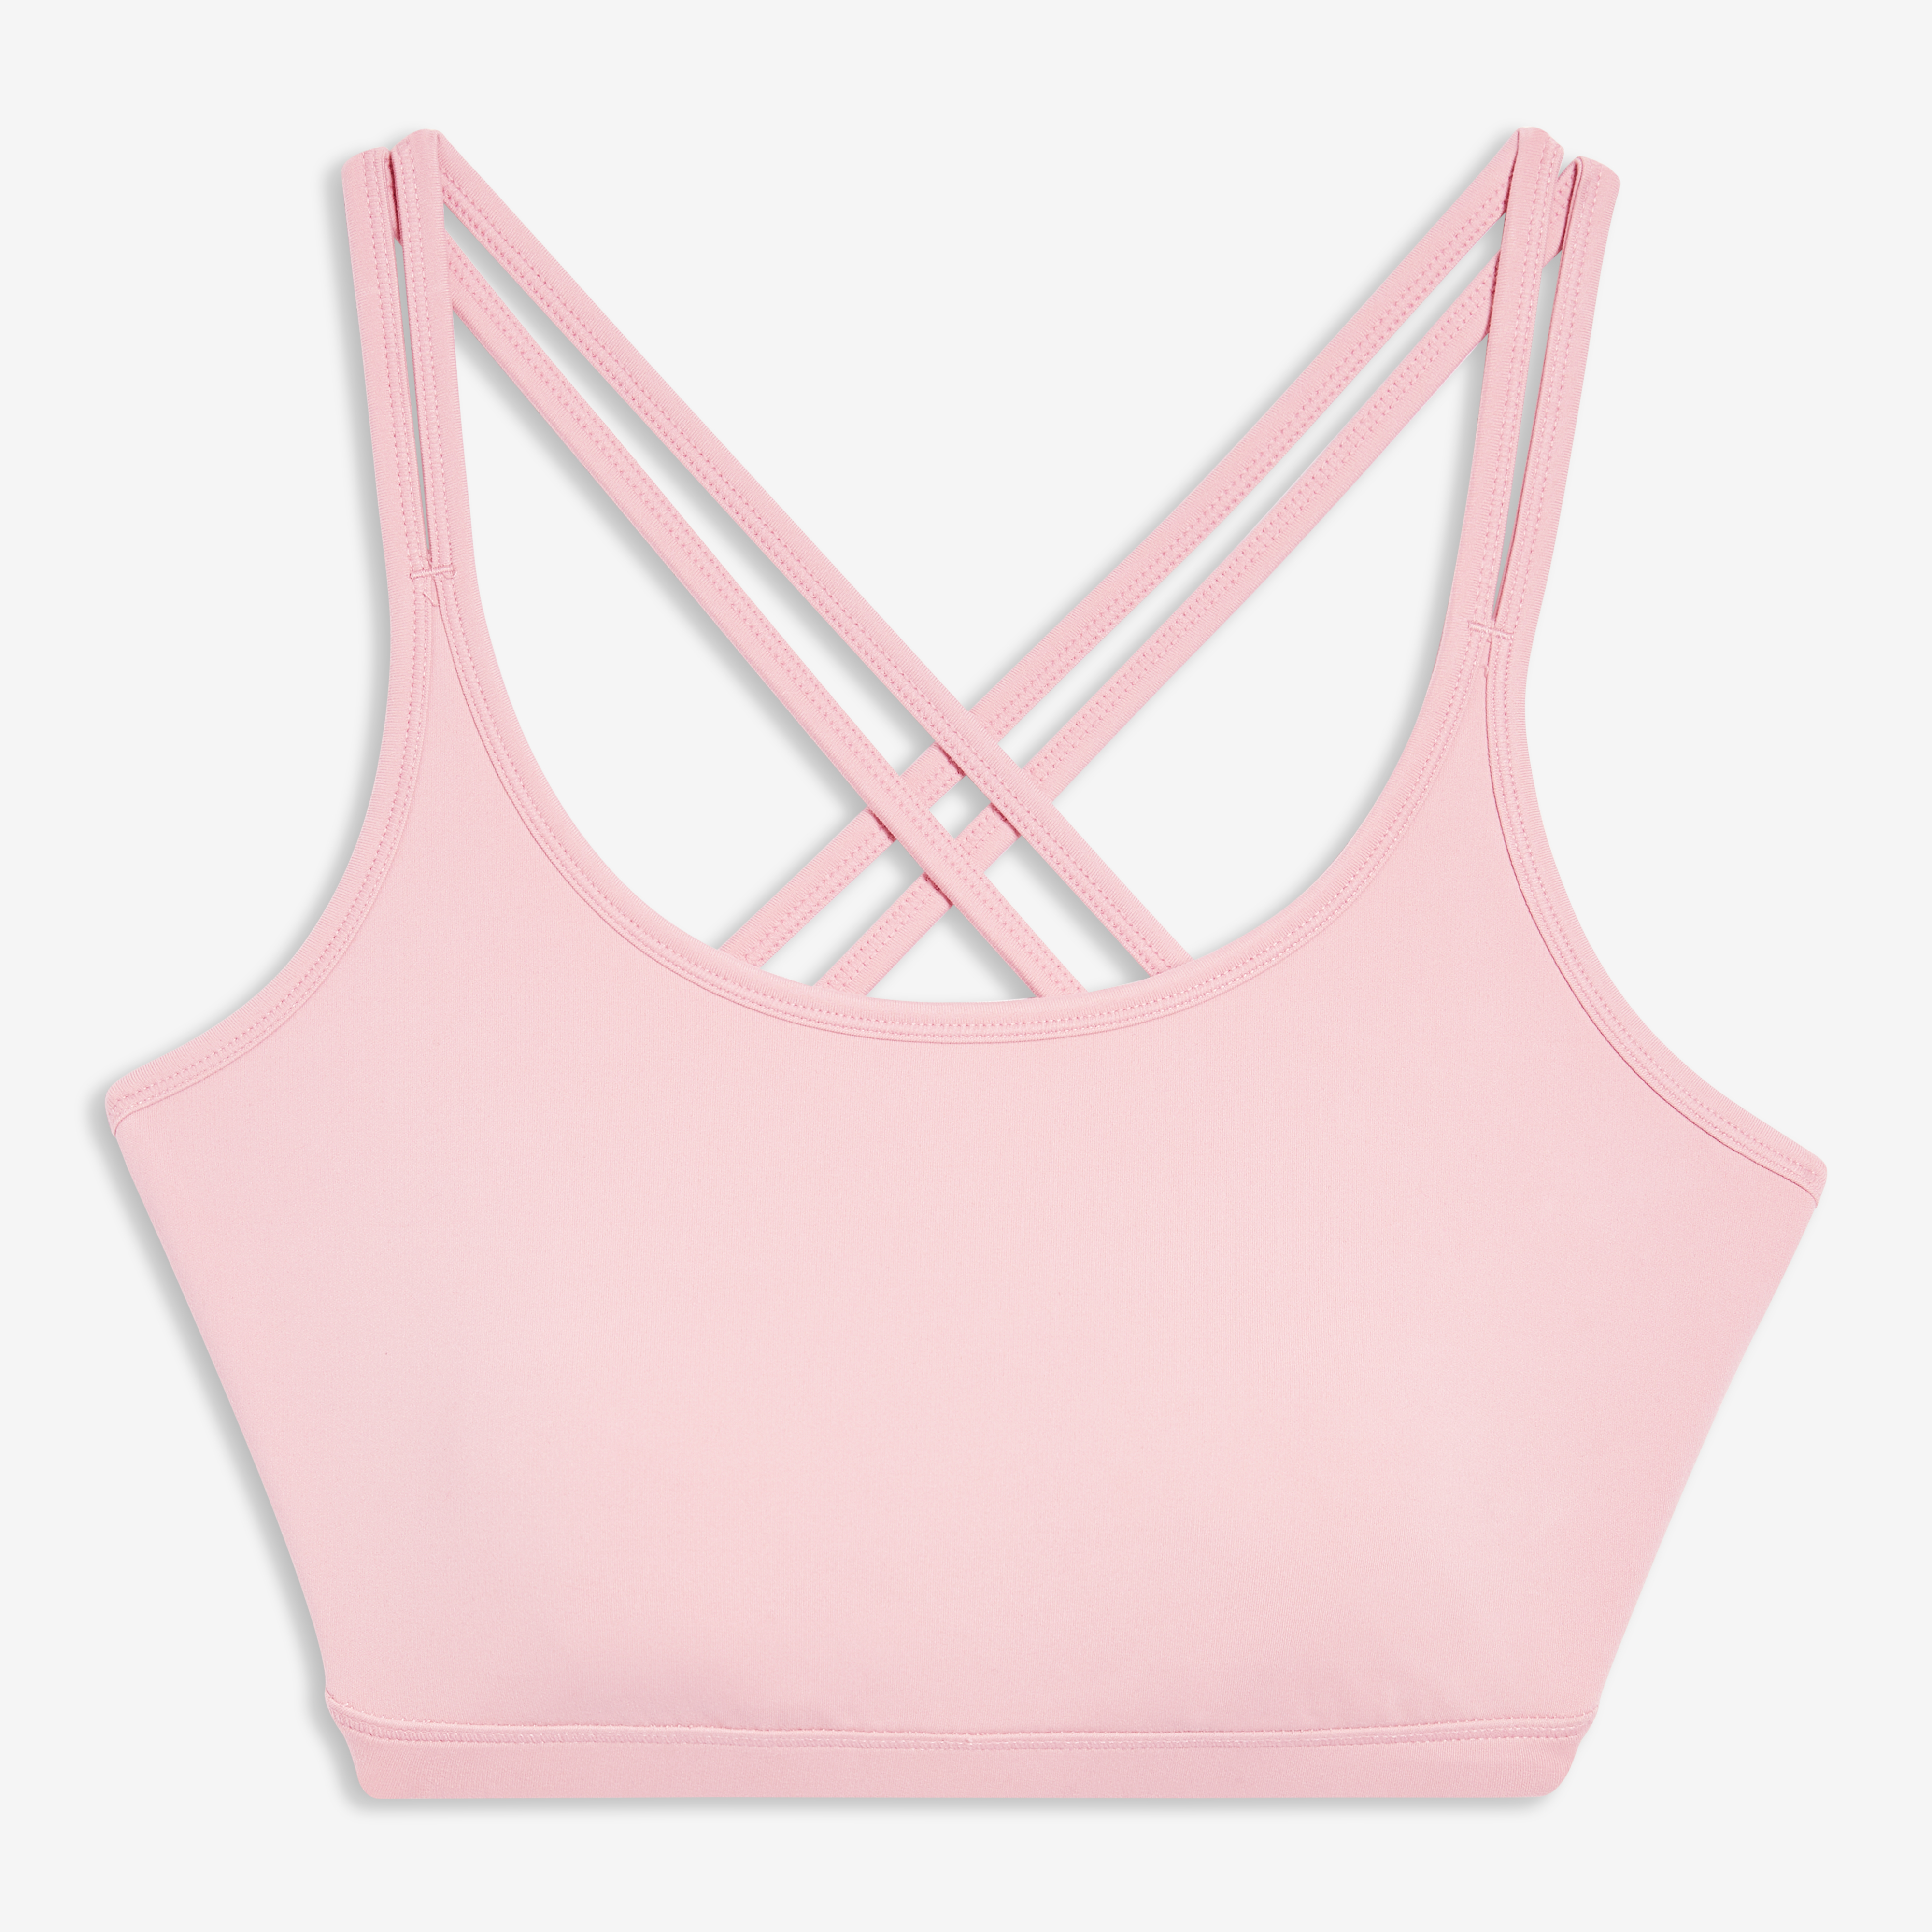 Pink Joe Fresh sports bra on white background